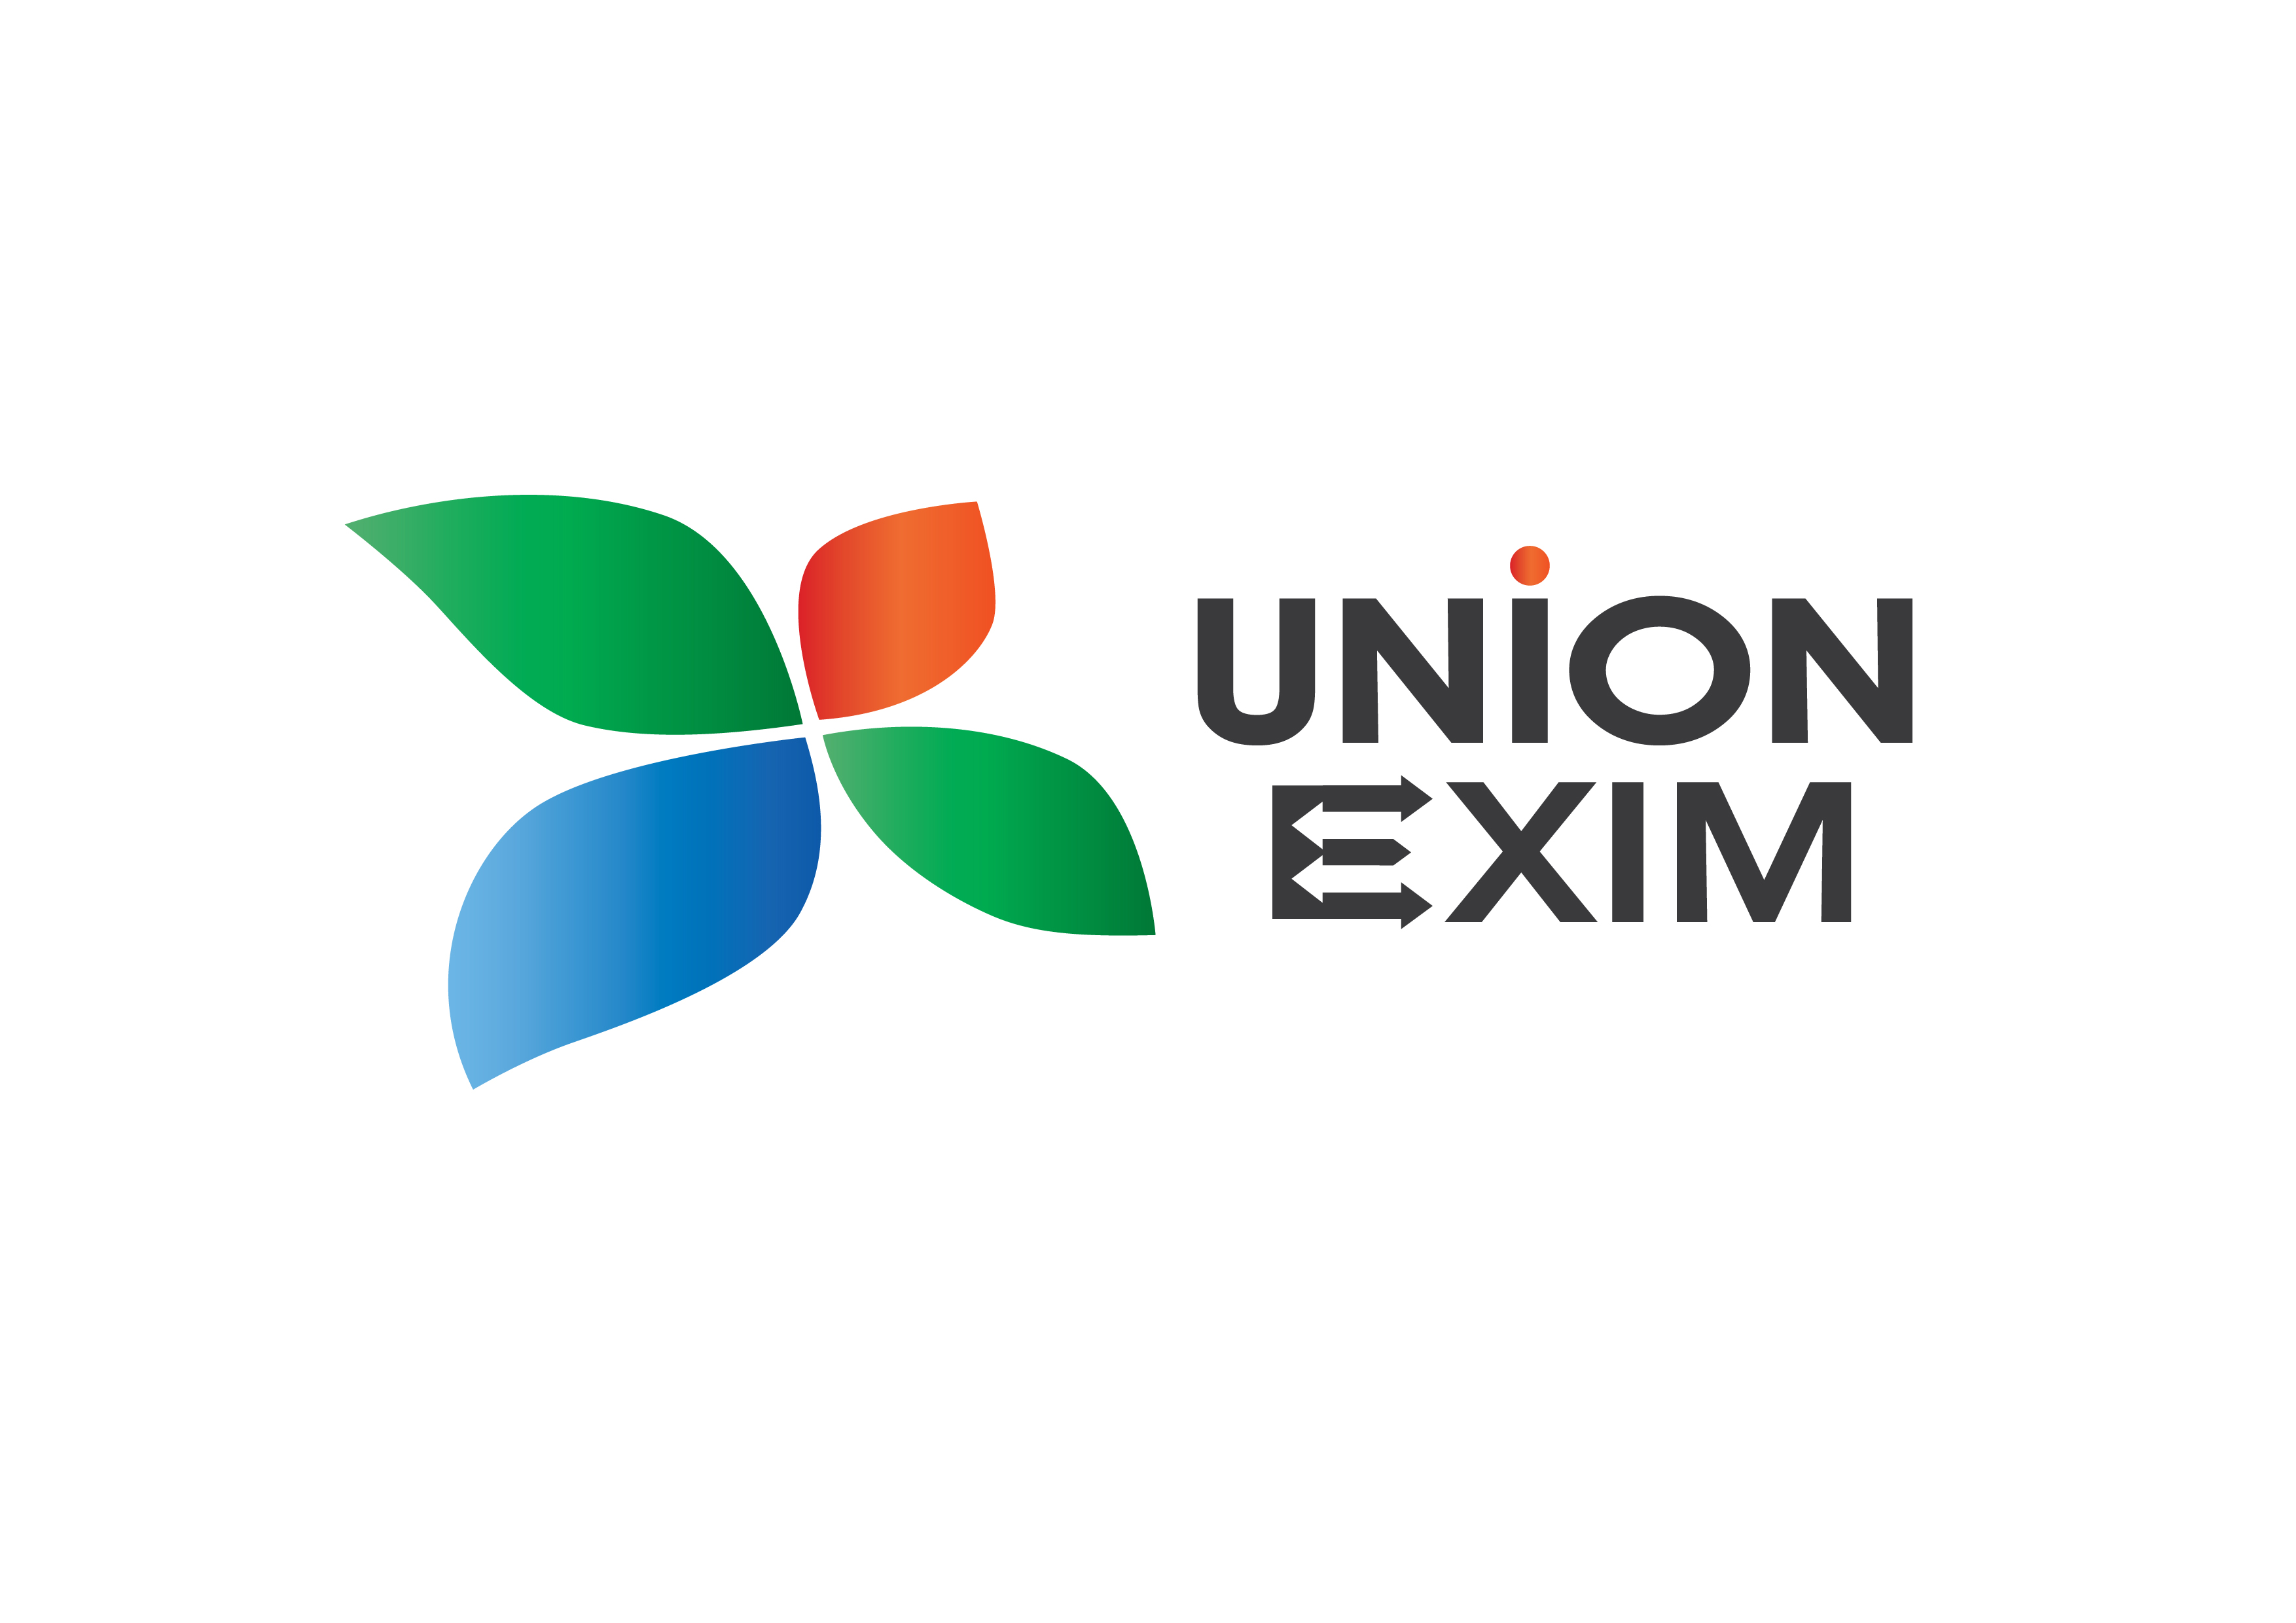 Union exim